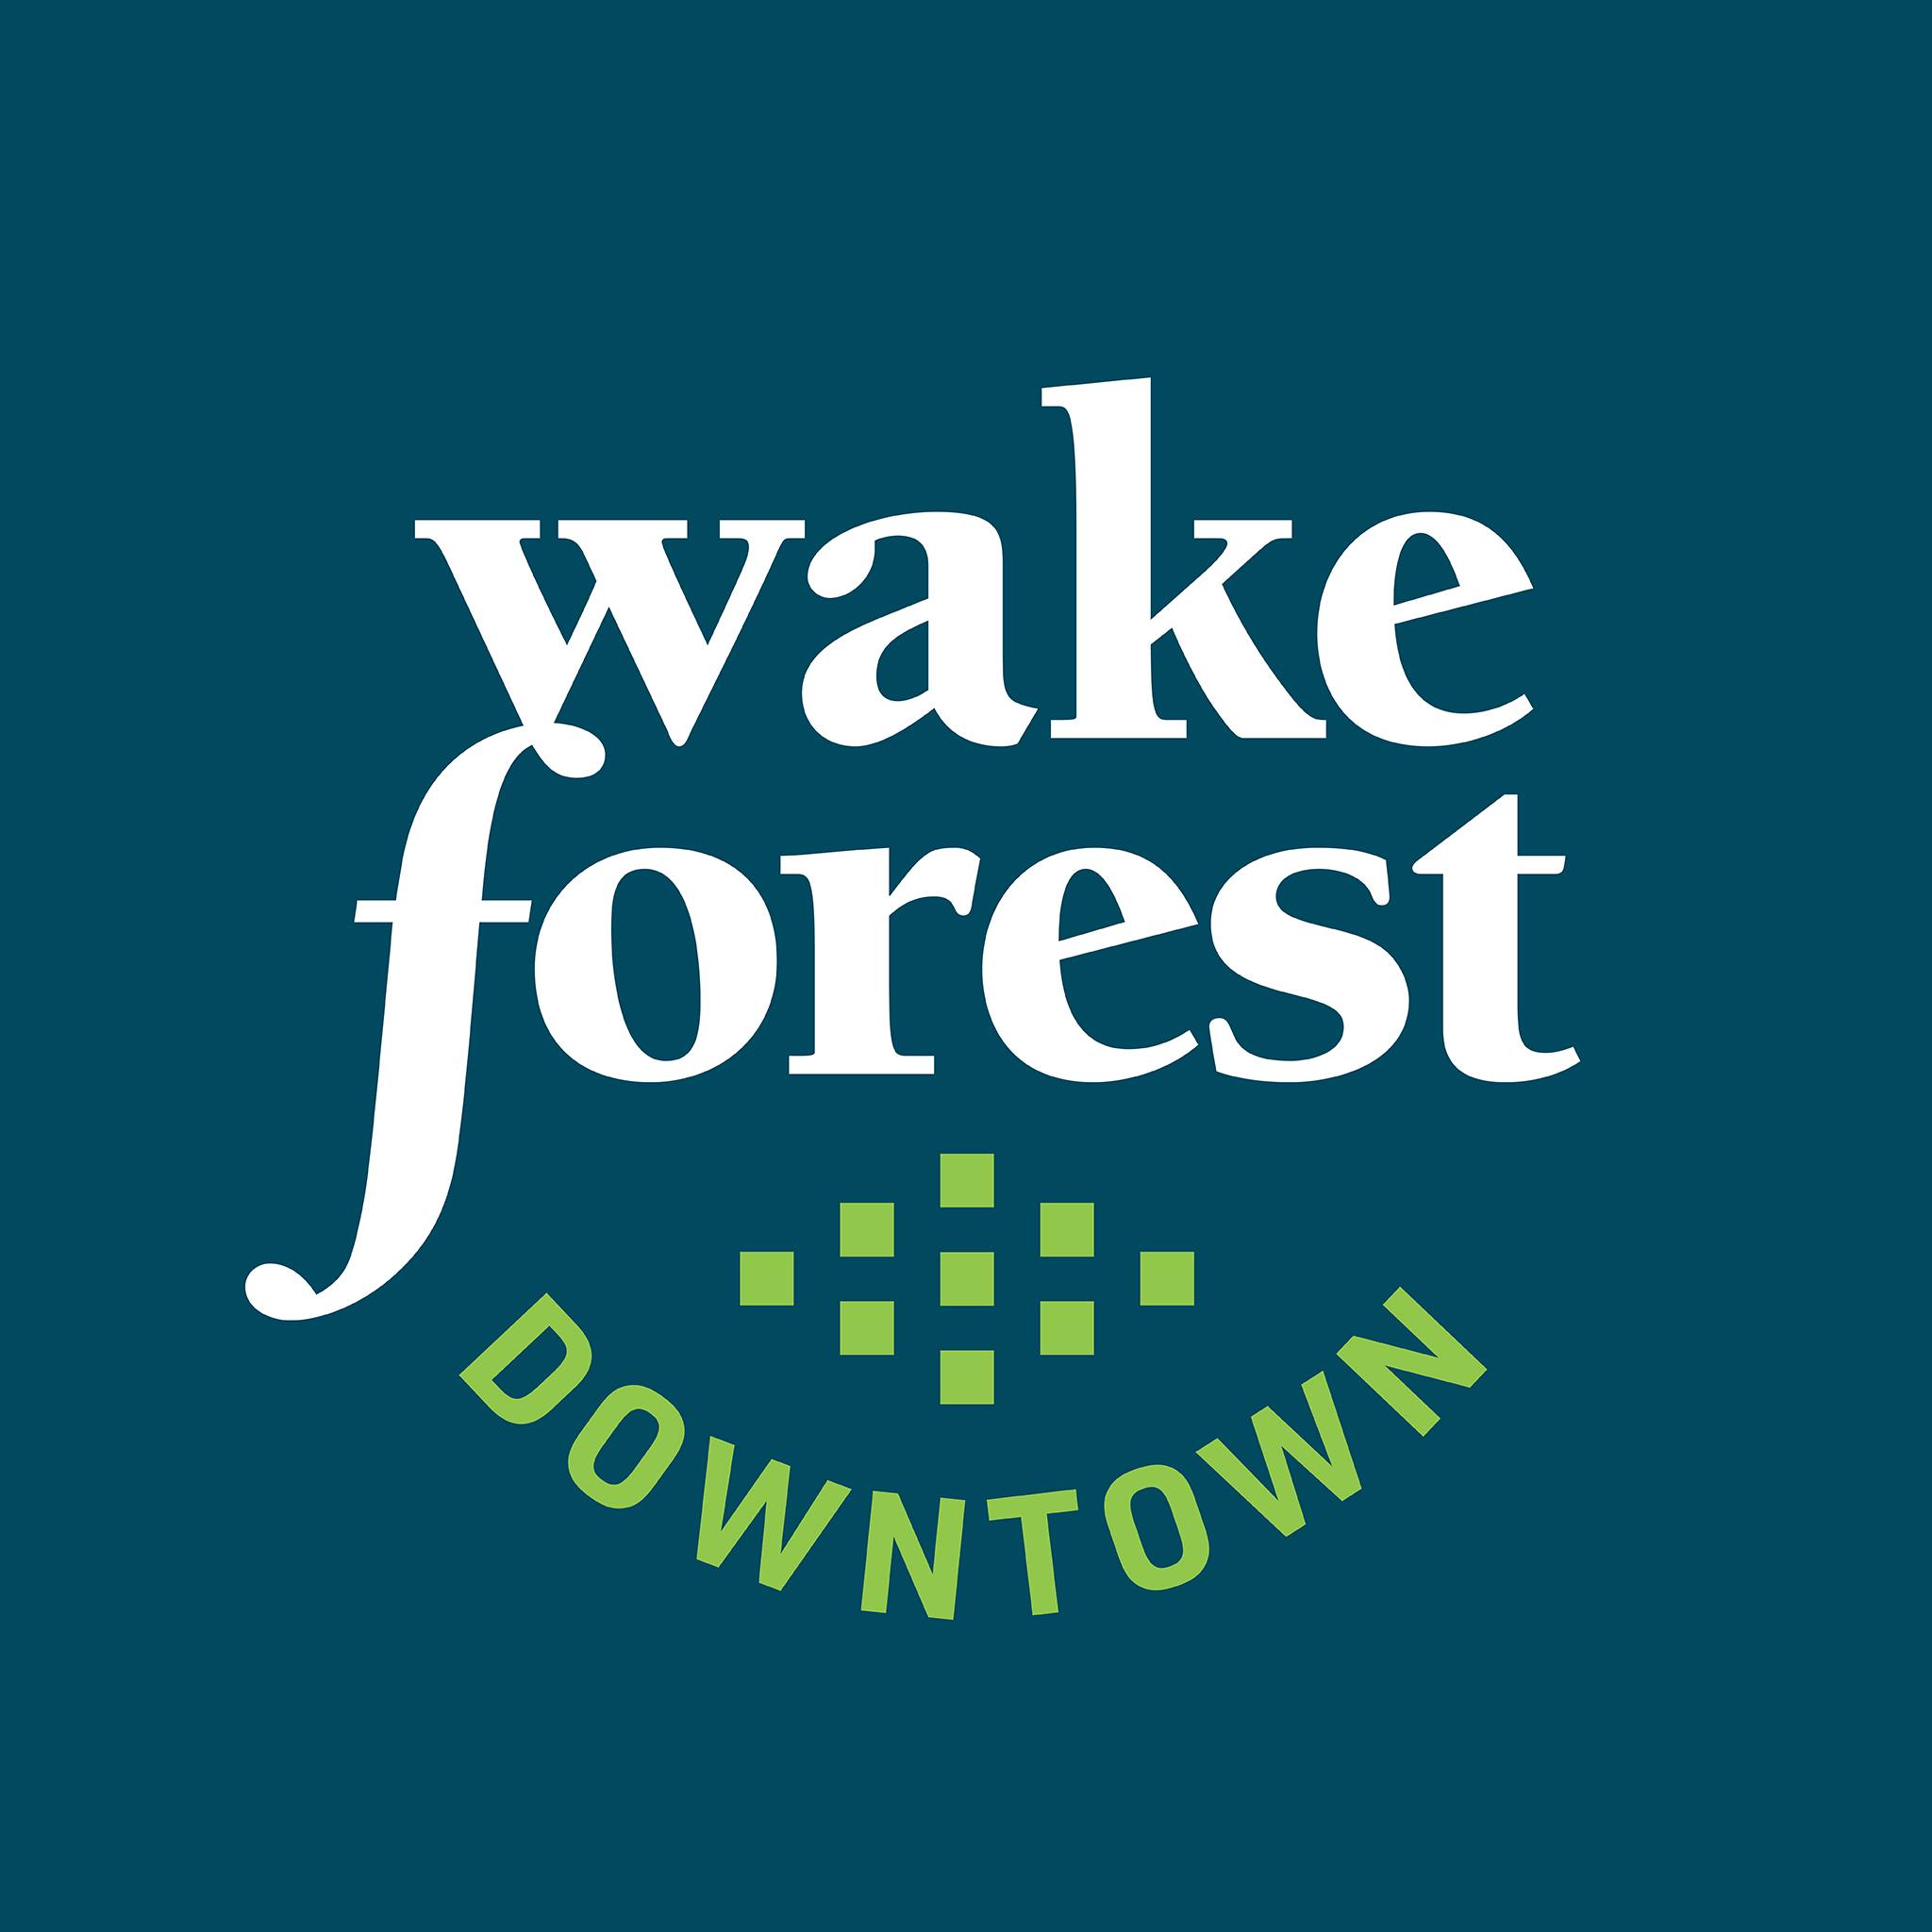 Sponsor Wake Forest Downtown